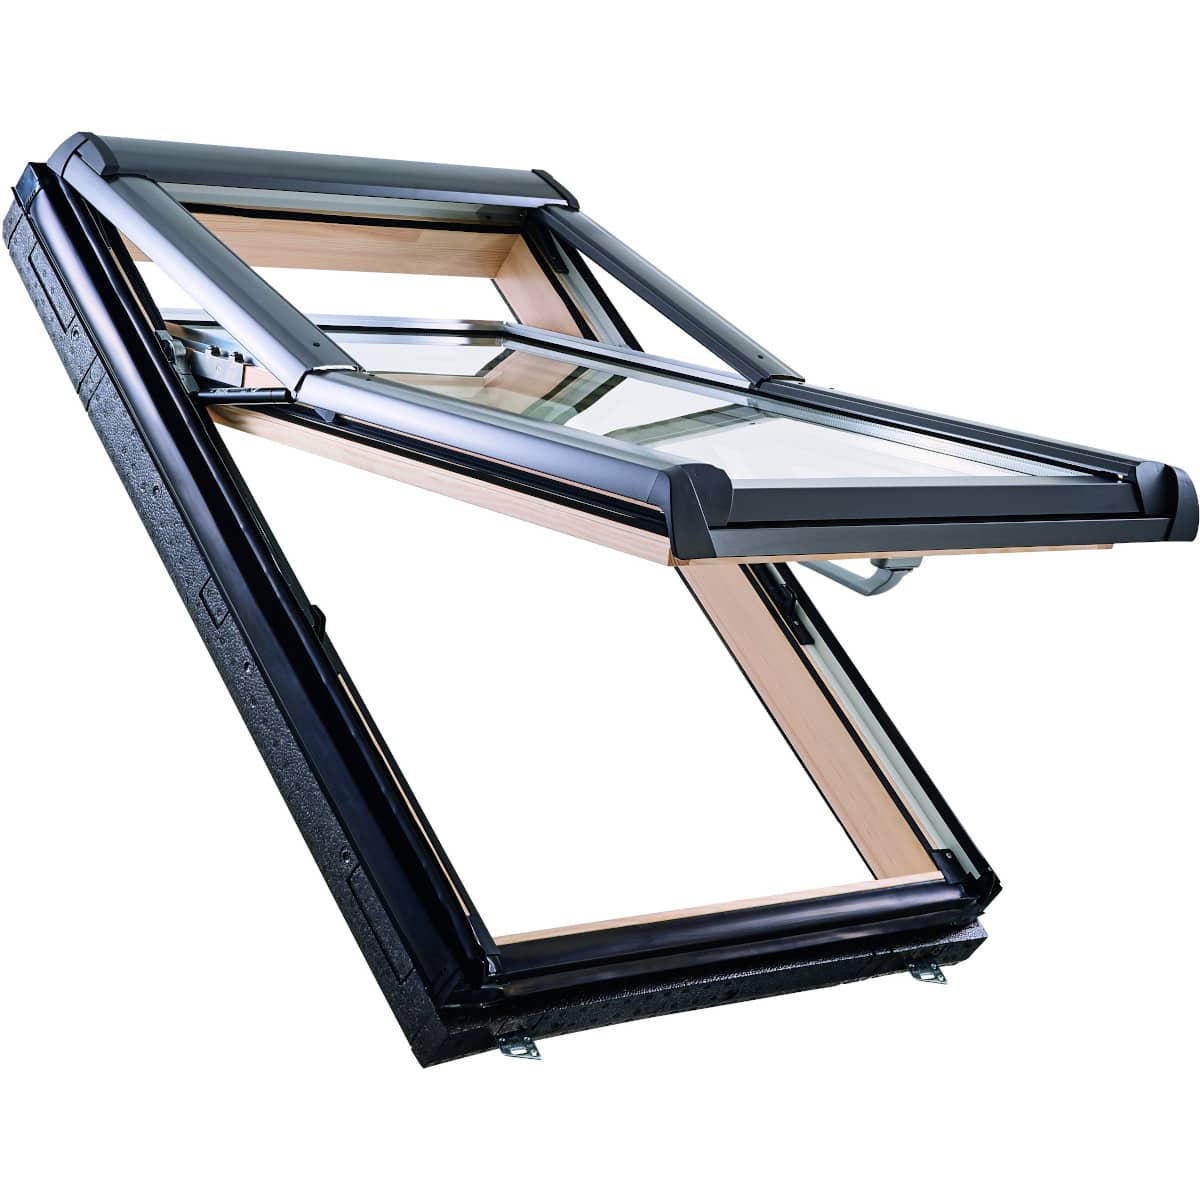 Окно мансардное деревянное Roto R75 H200. Однокамерный стеклопакет. ThermoBlock WD.